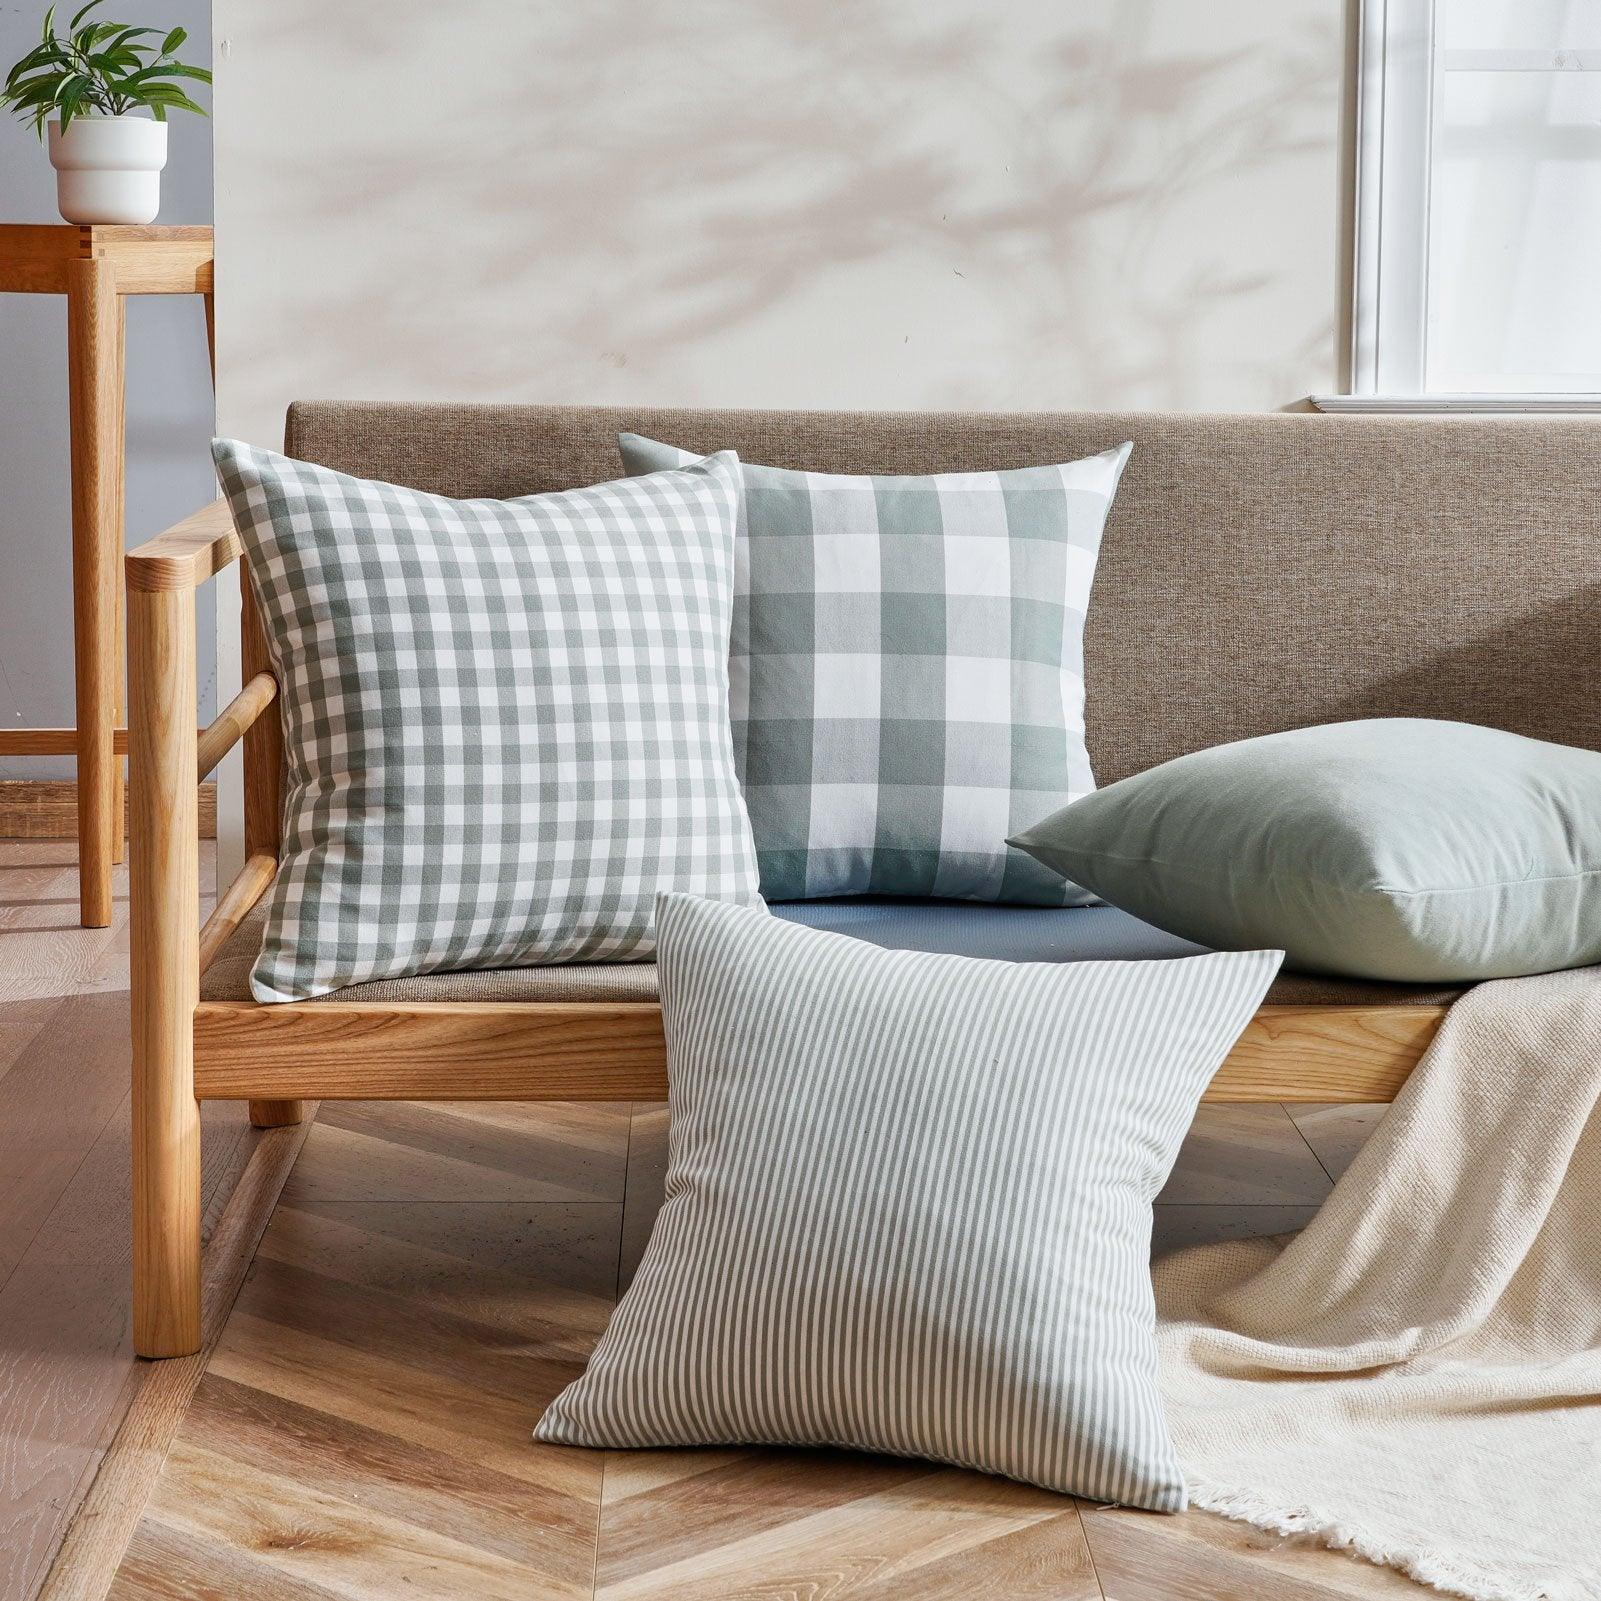 Buffalo Check Plaid Canvas Striped Decorative pillow covers 20x20 for Sofa Chair-4 Packs - Topfinel